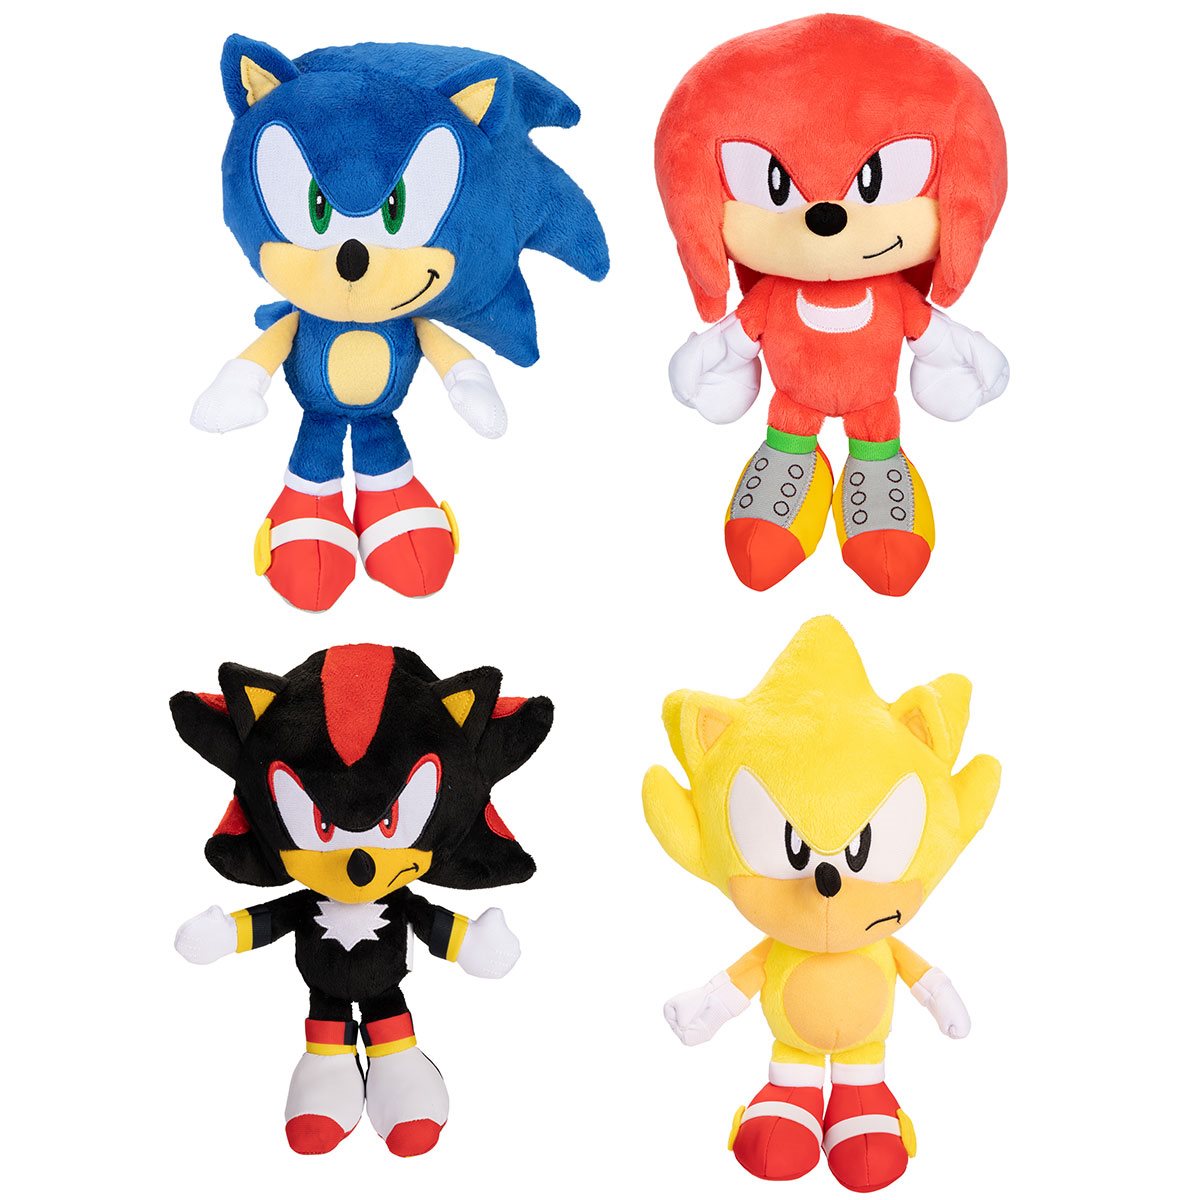 Sonic The Hedgehog Sonic Classic Jakks Pacific